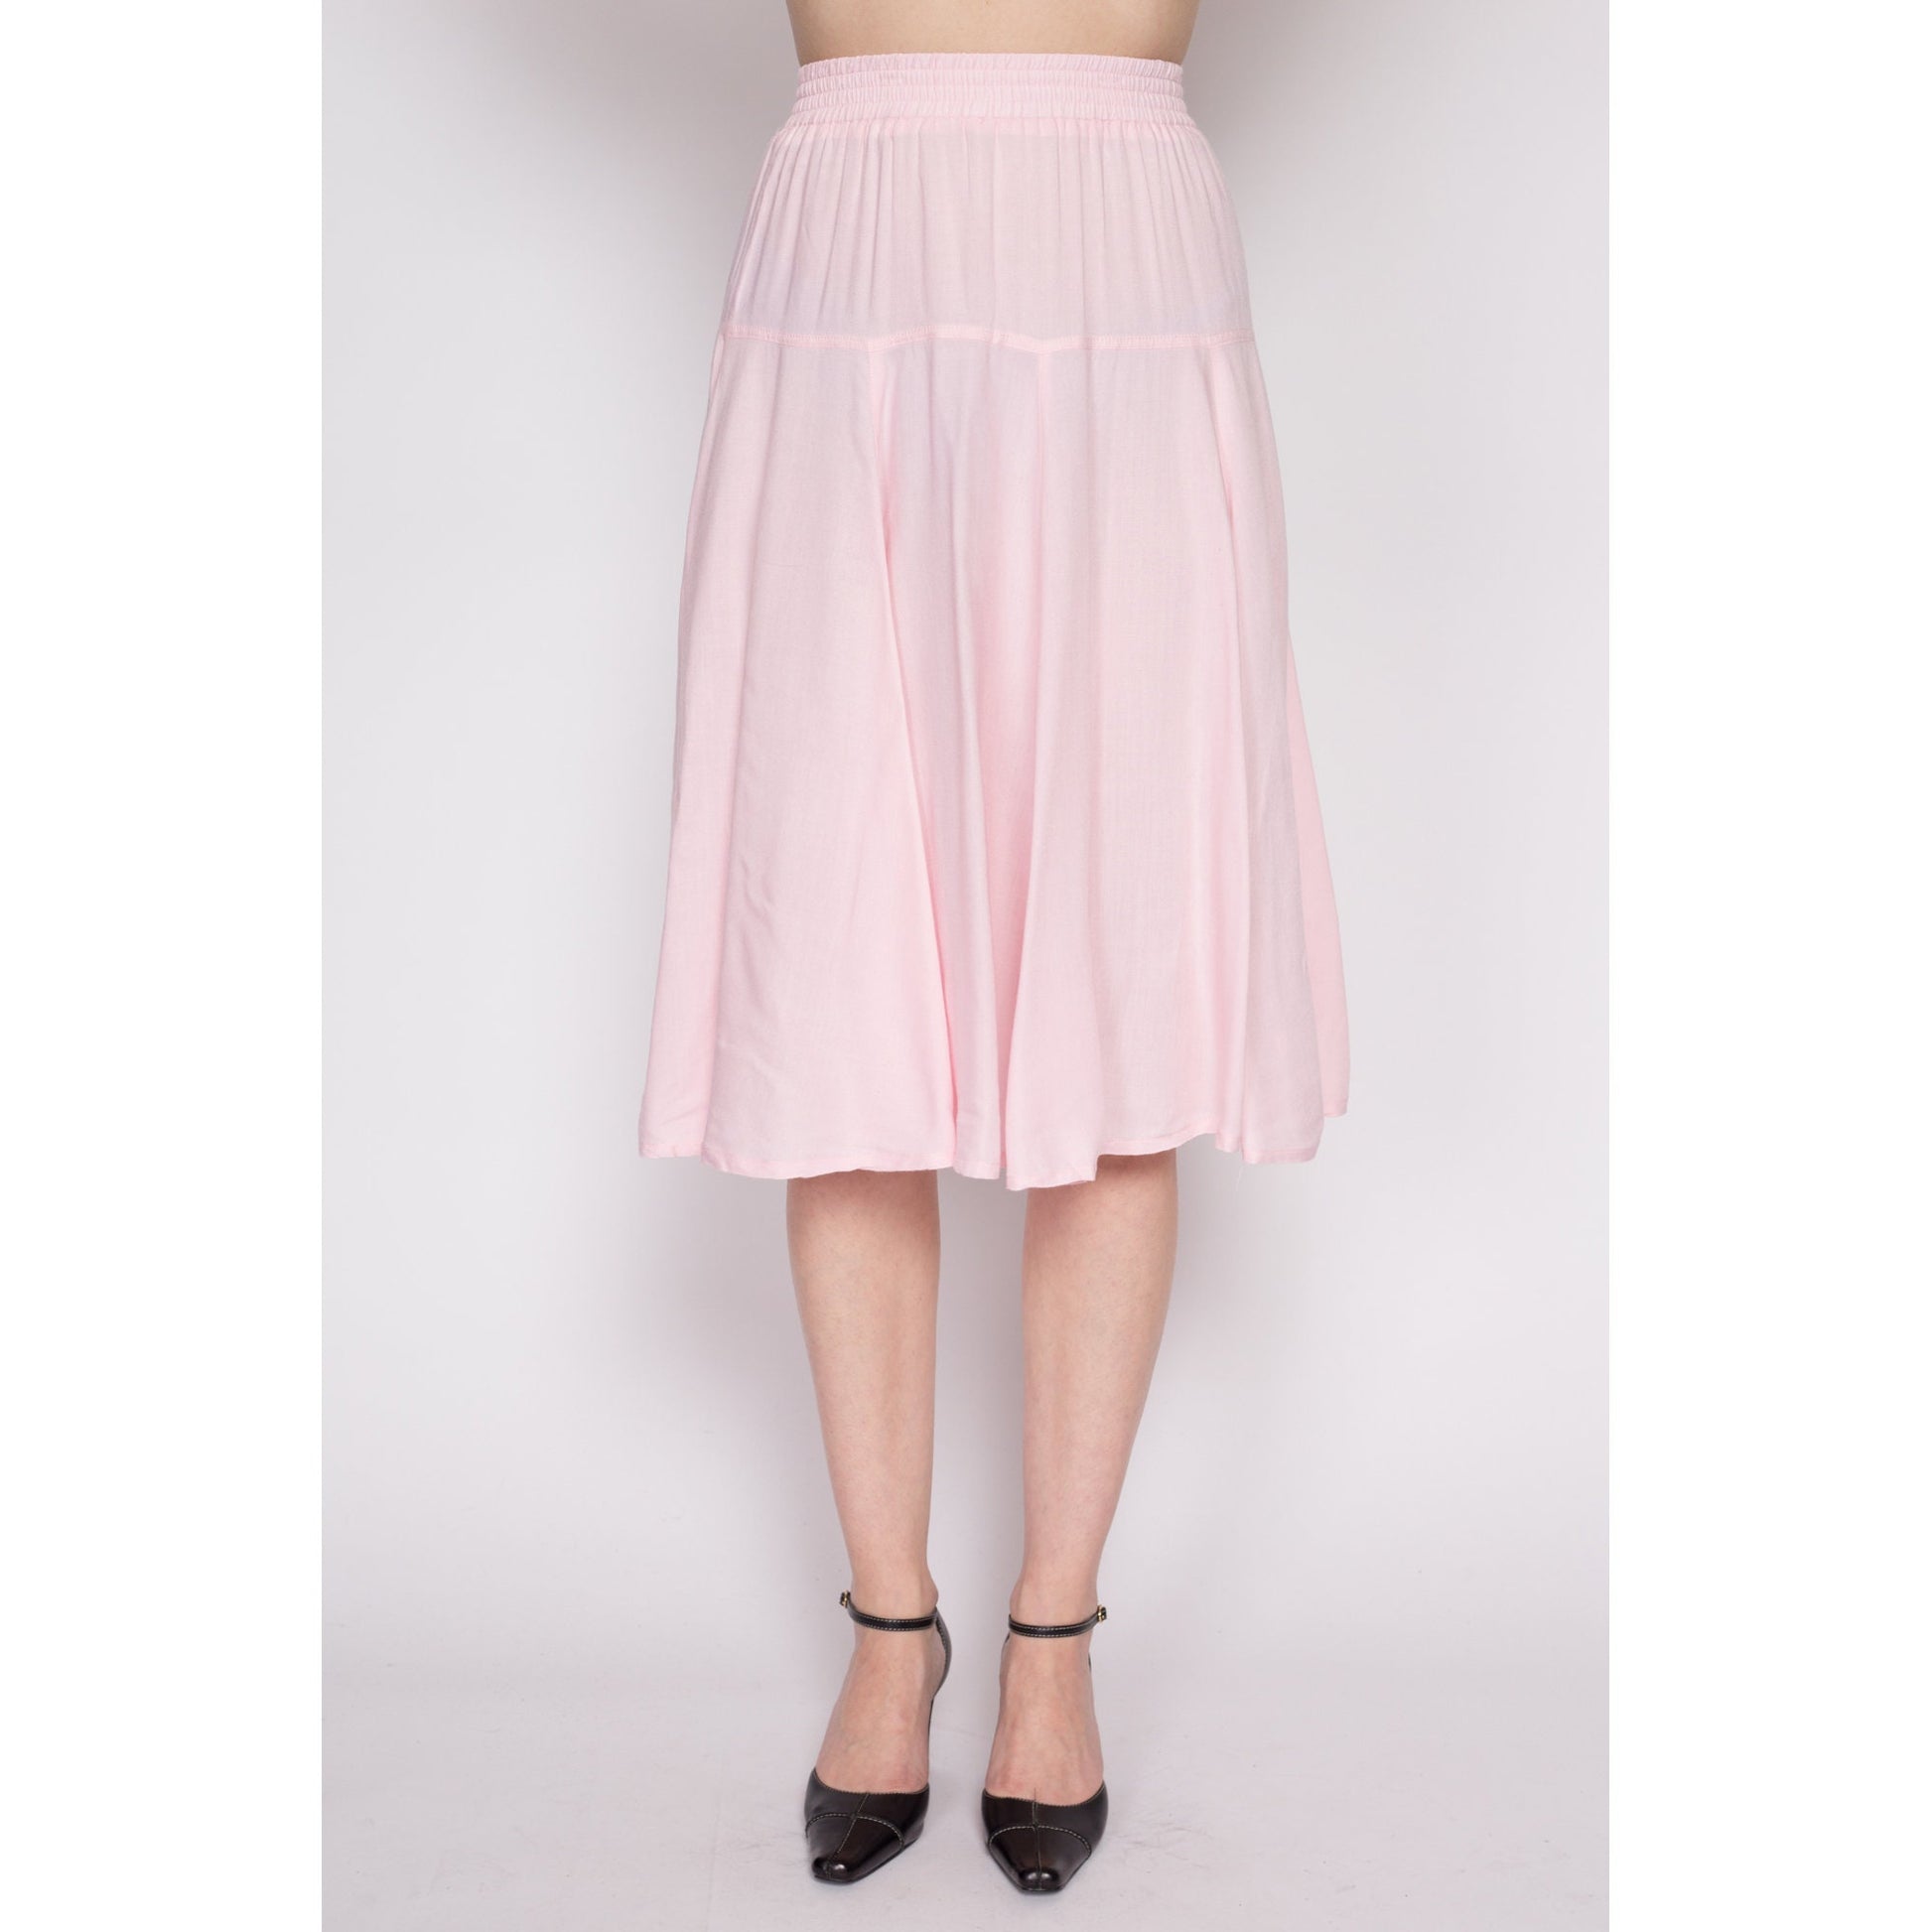 Pastel pink midi skirts